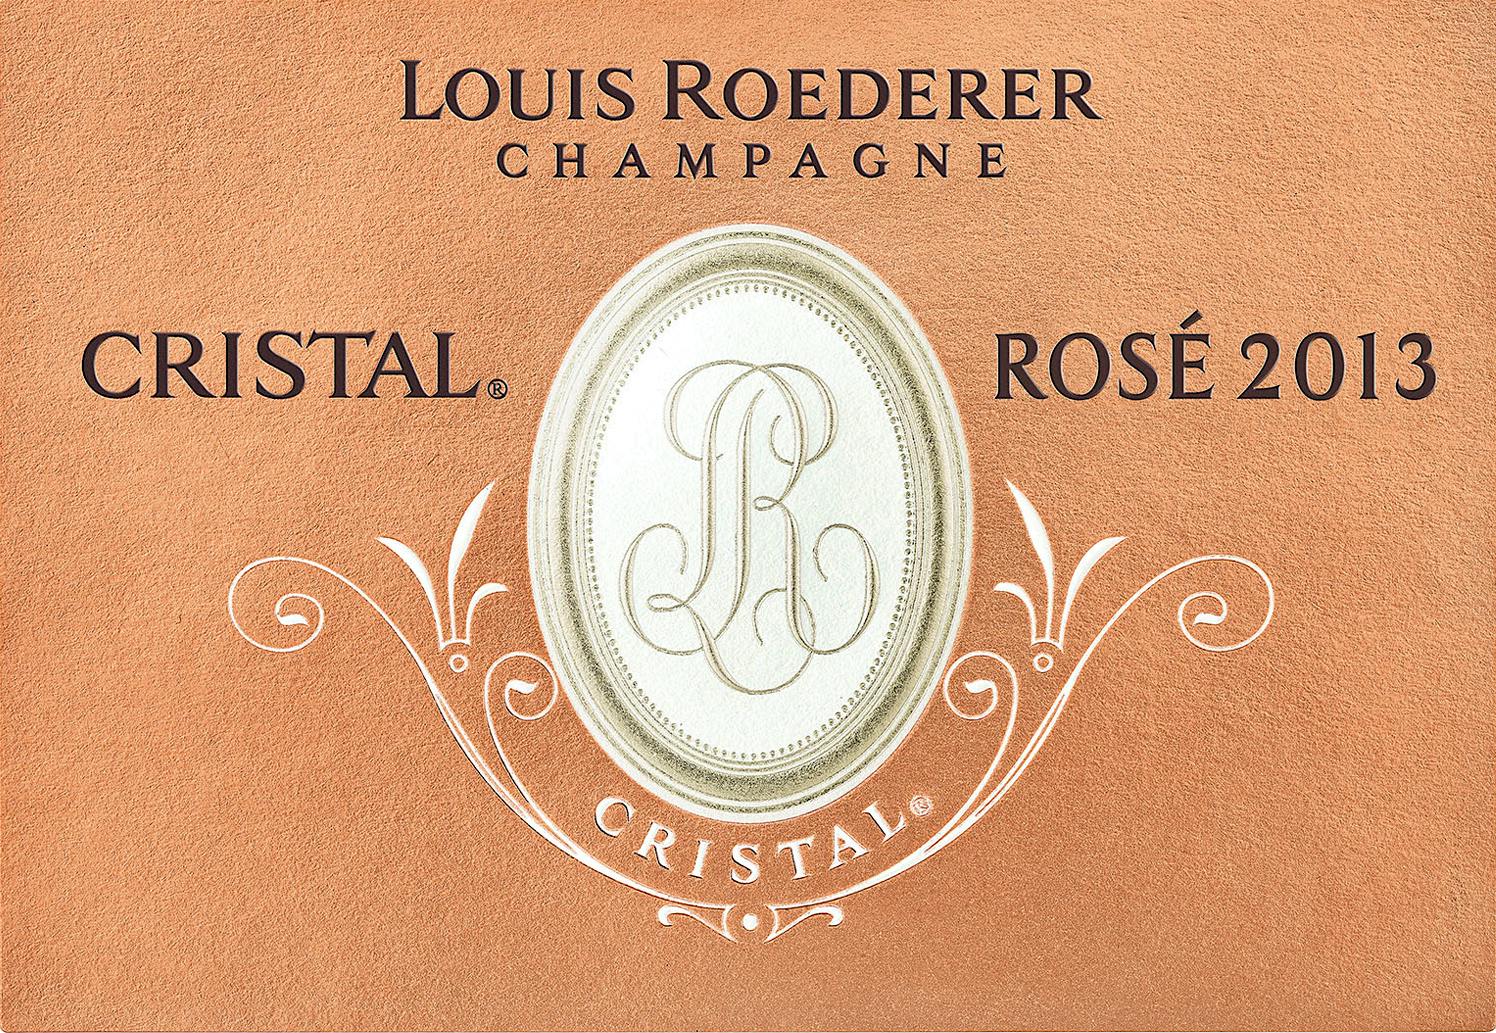 Label for Louis Roederer